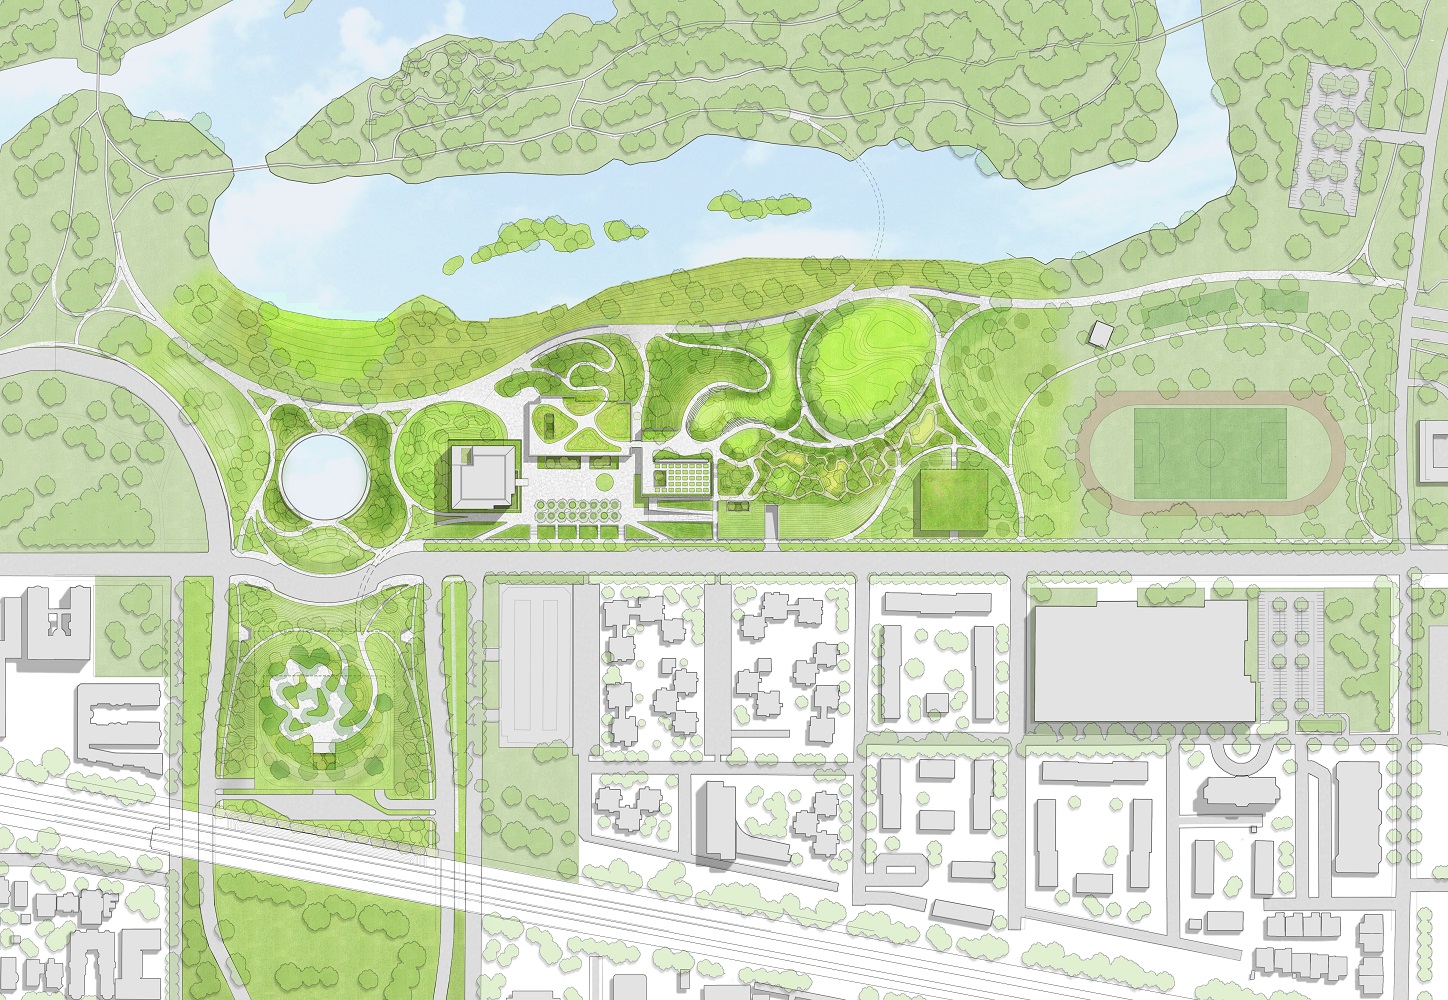 Obama Presidential Center, conceptual site plan